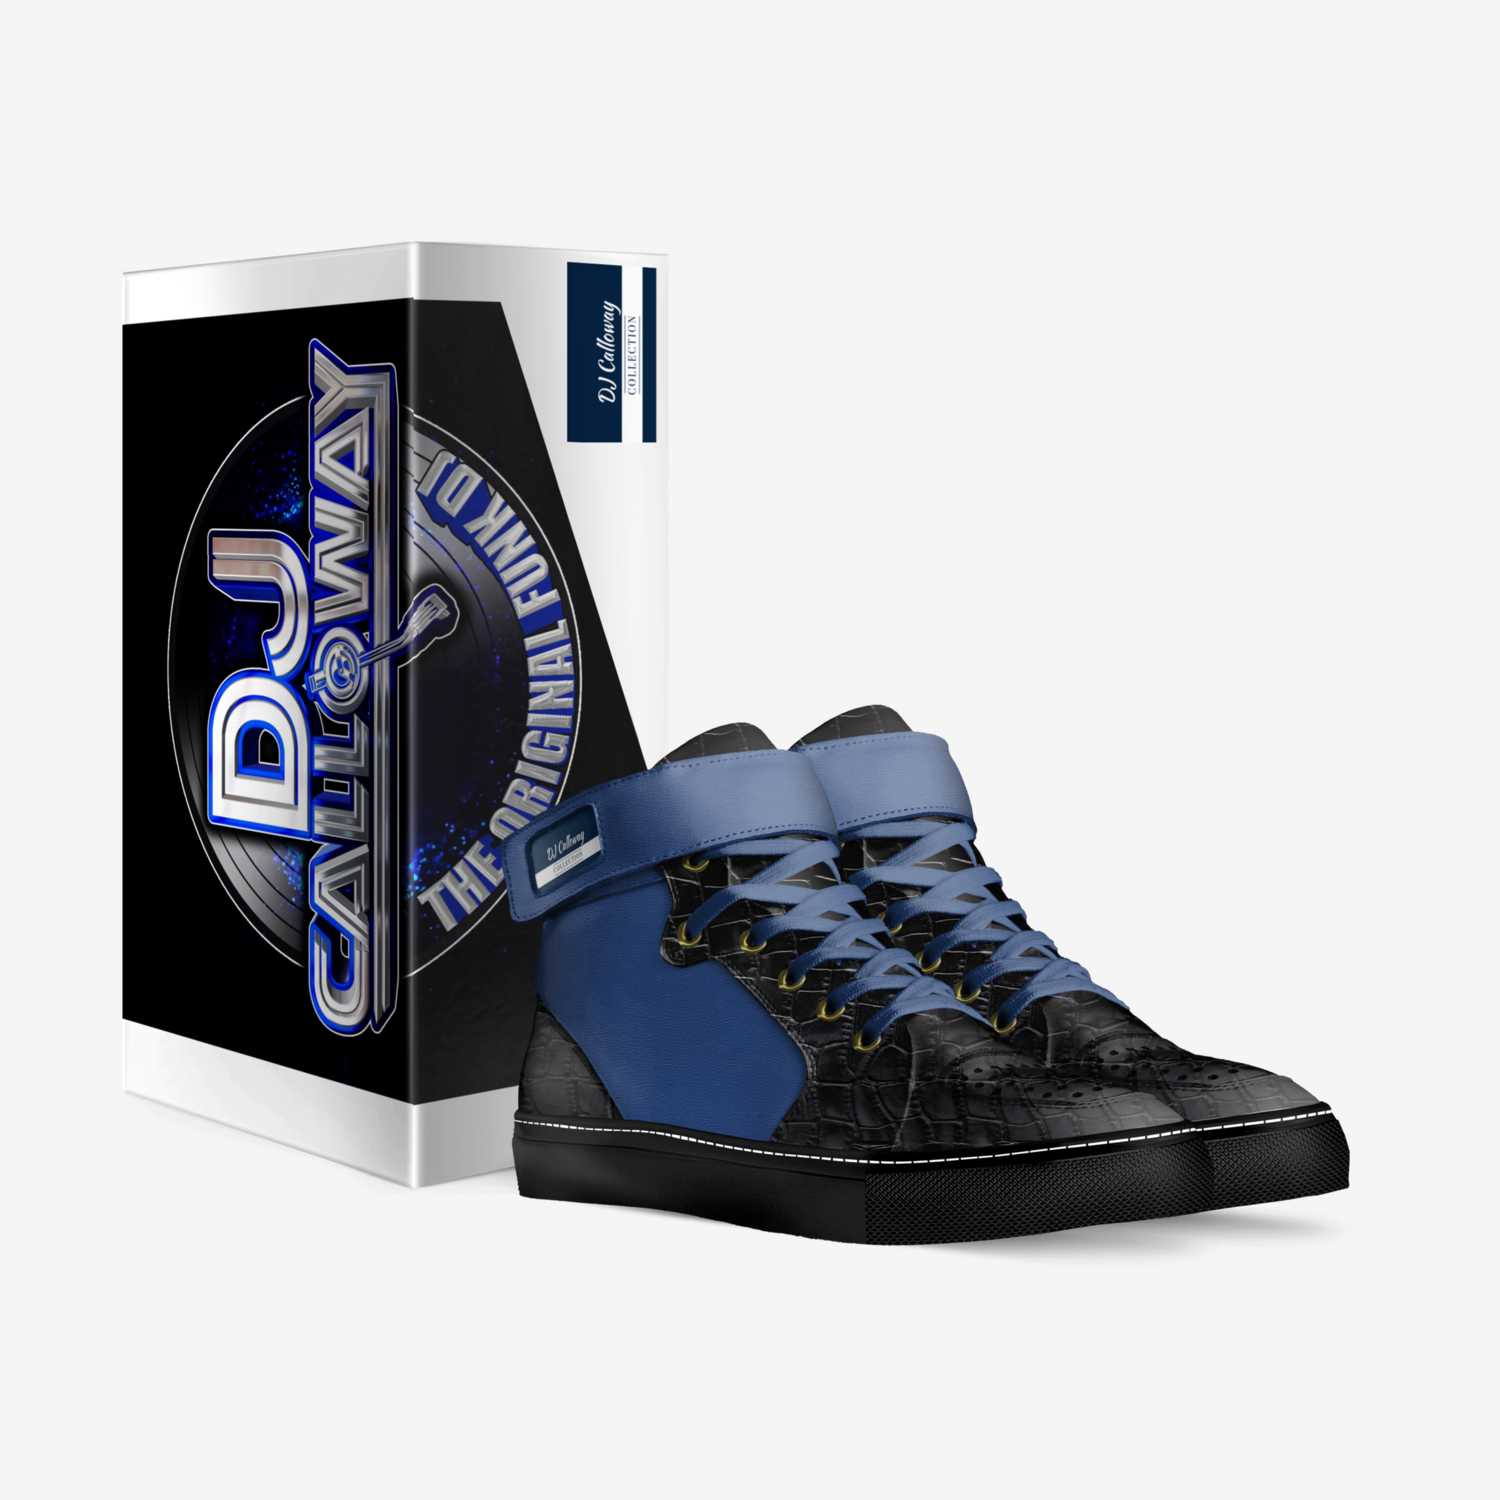 DJ Calloway custom made in Italy shoes by Joseph T. Calloway | Box view